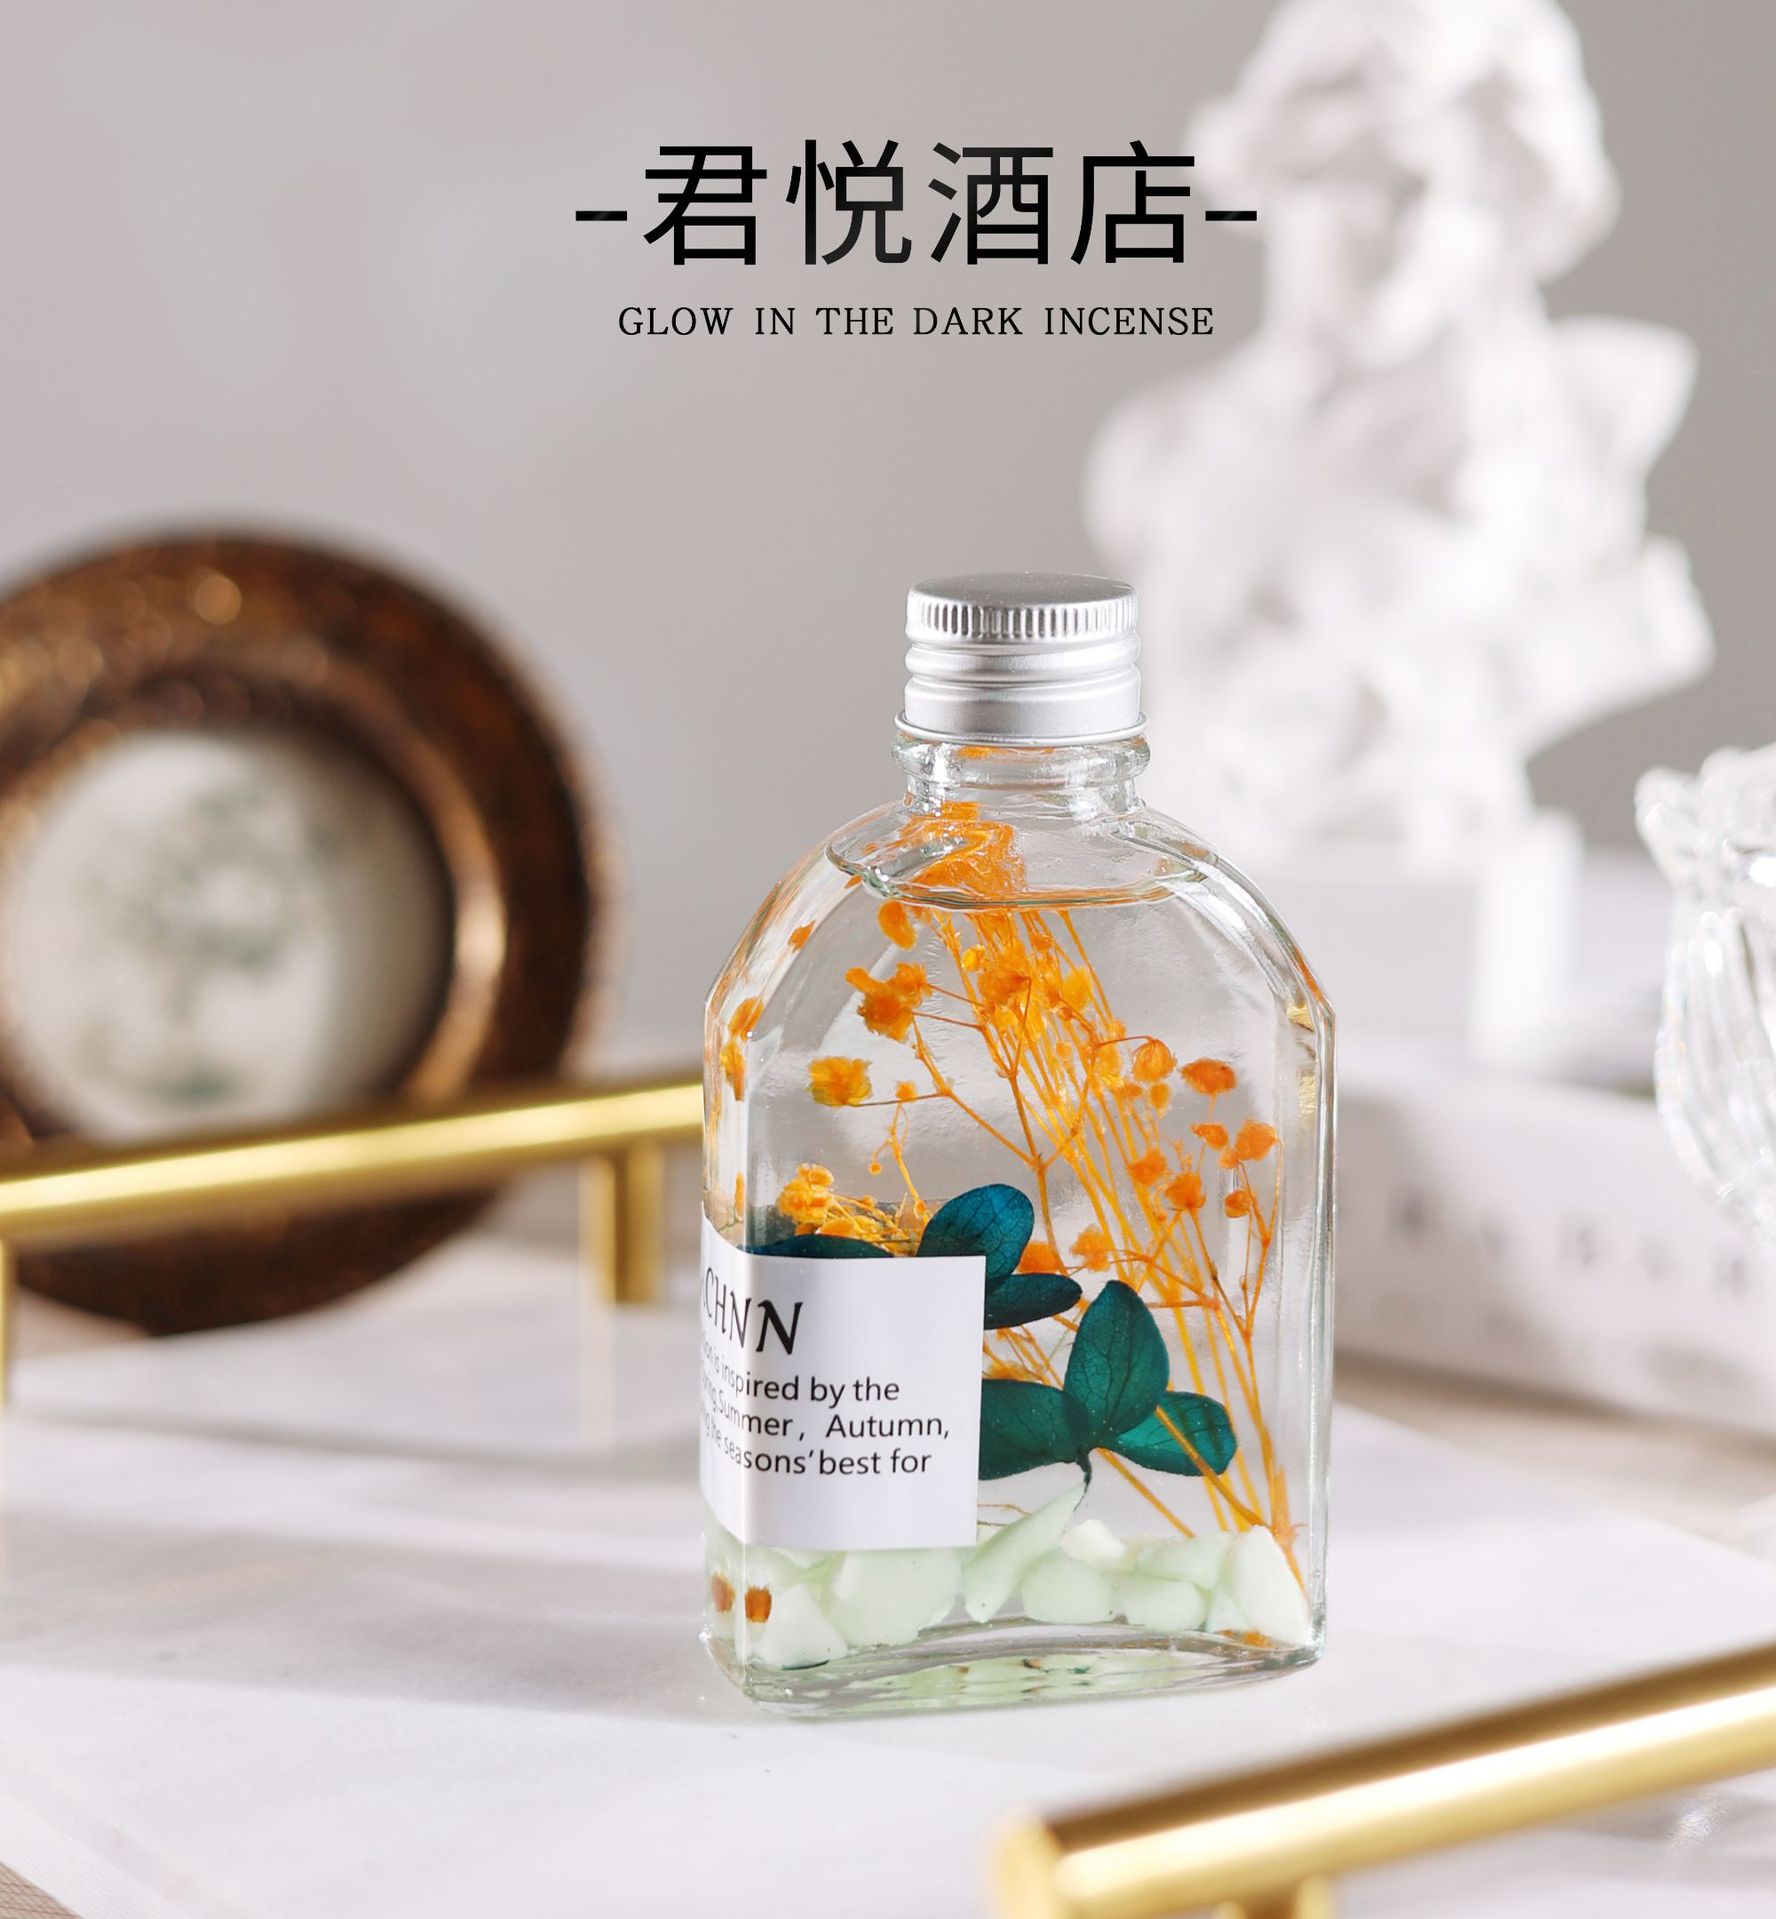 Factory Wholesale Luminous Aromatherapy Essential Oil Air Freshener Bedroom Long-Lasting Home Indoor Bathroom Perfume